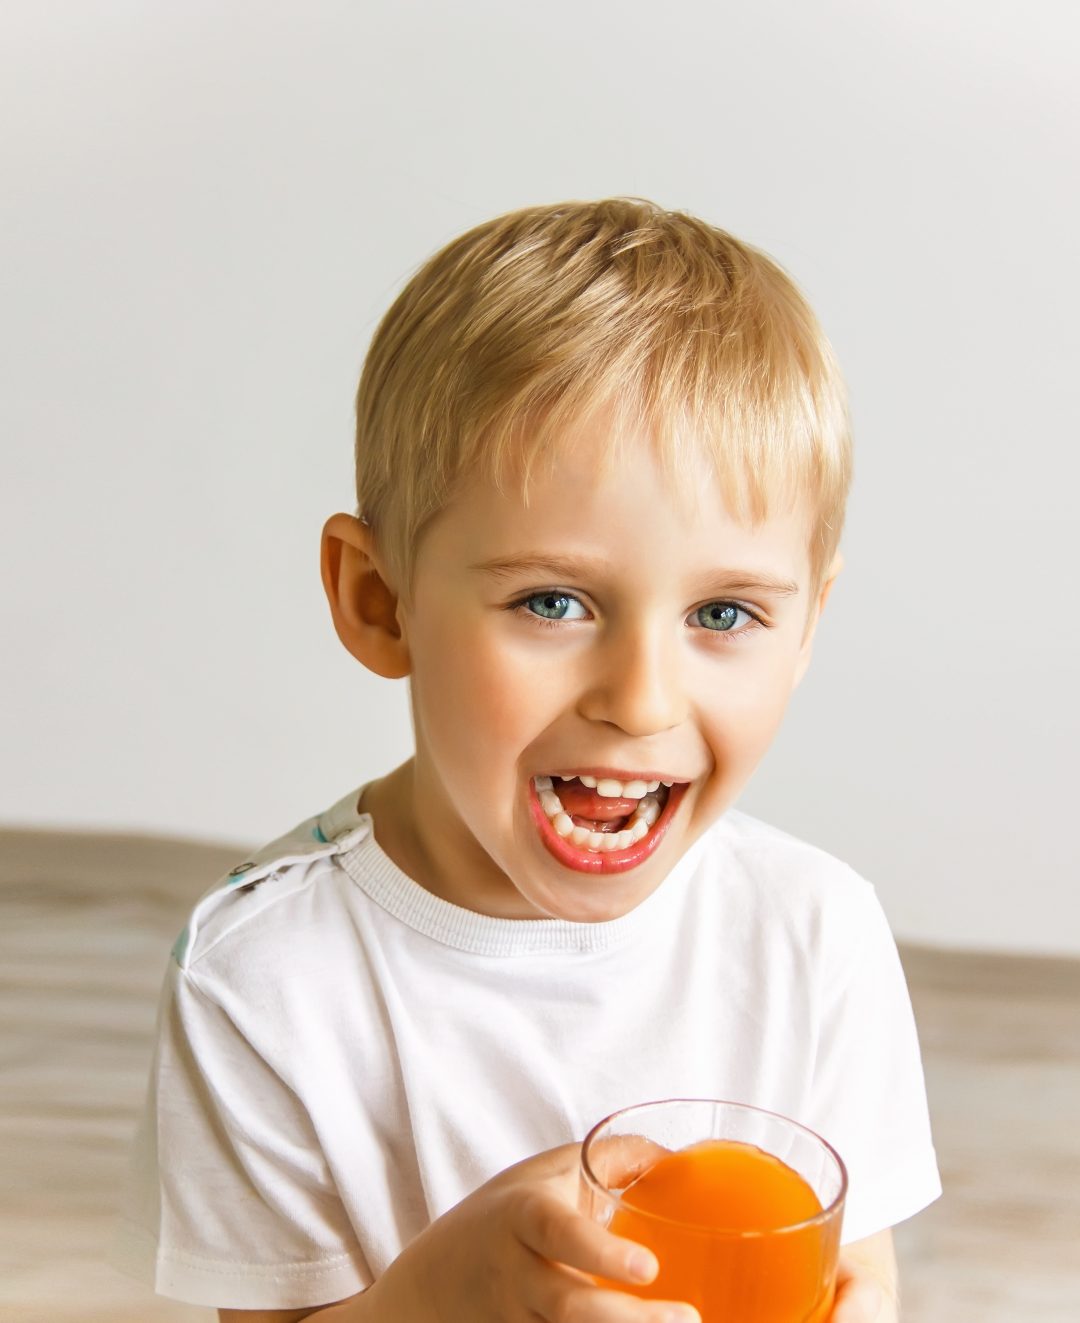 Does Juice Cause Cavities? | Port Pediatric Dentistry